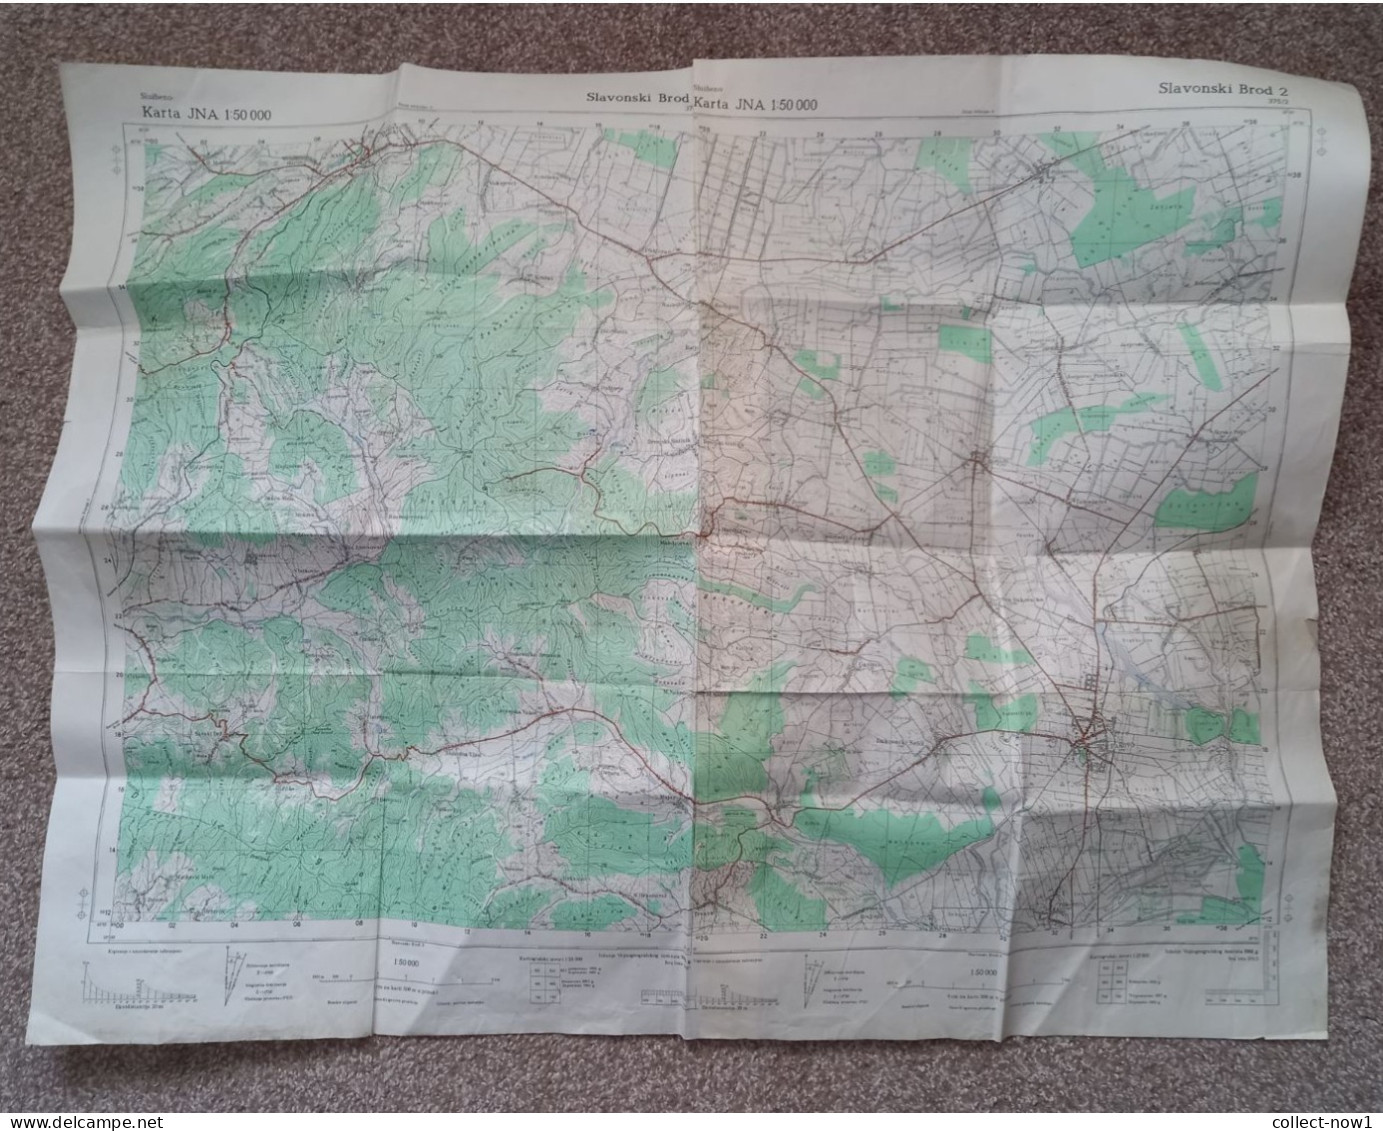 Topographical Maps - Croatia / Slavonski Brod - JNA YUGOSLAVIA ARMY MAP MILITARY CHART PLAN - Topographical Maps